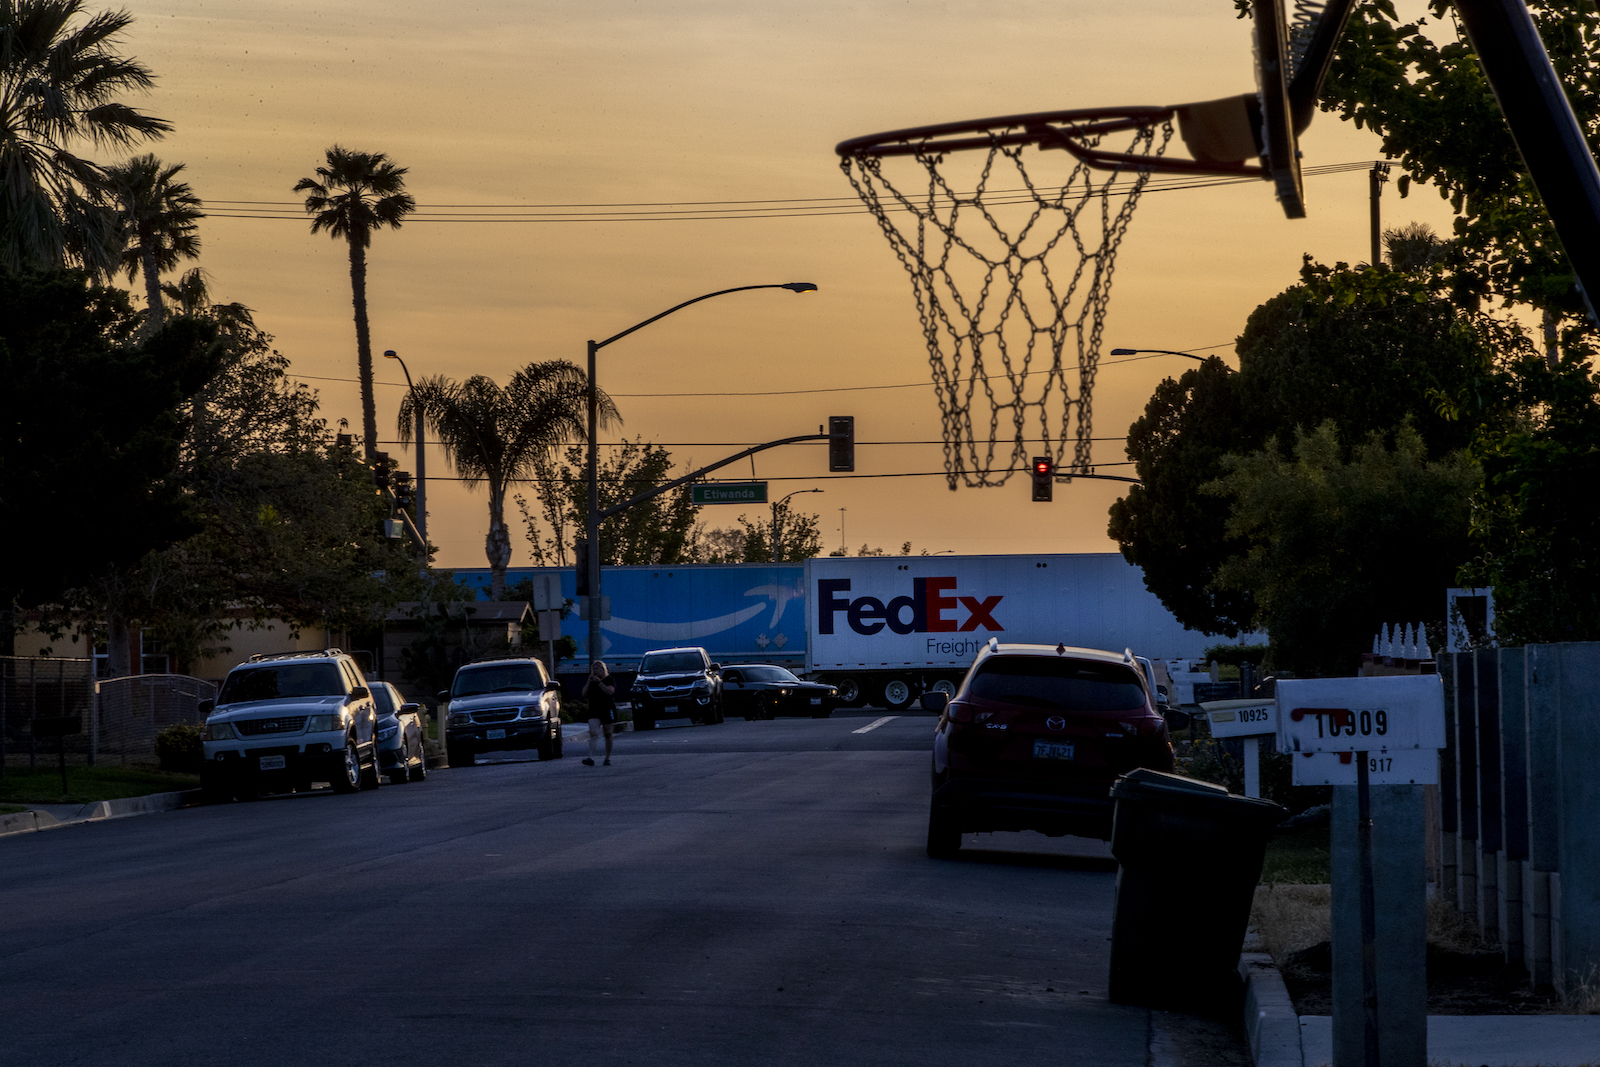 Two 18-wheeler trucks pass through a neighborhood below an orange sky with a basketball hoop in the foreground.